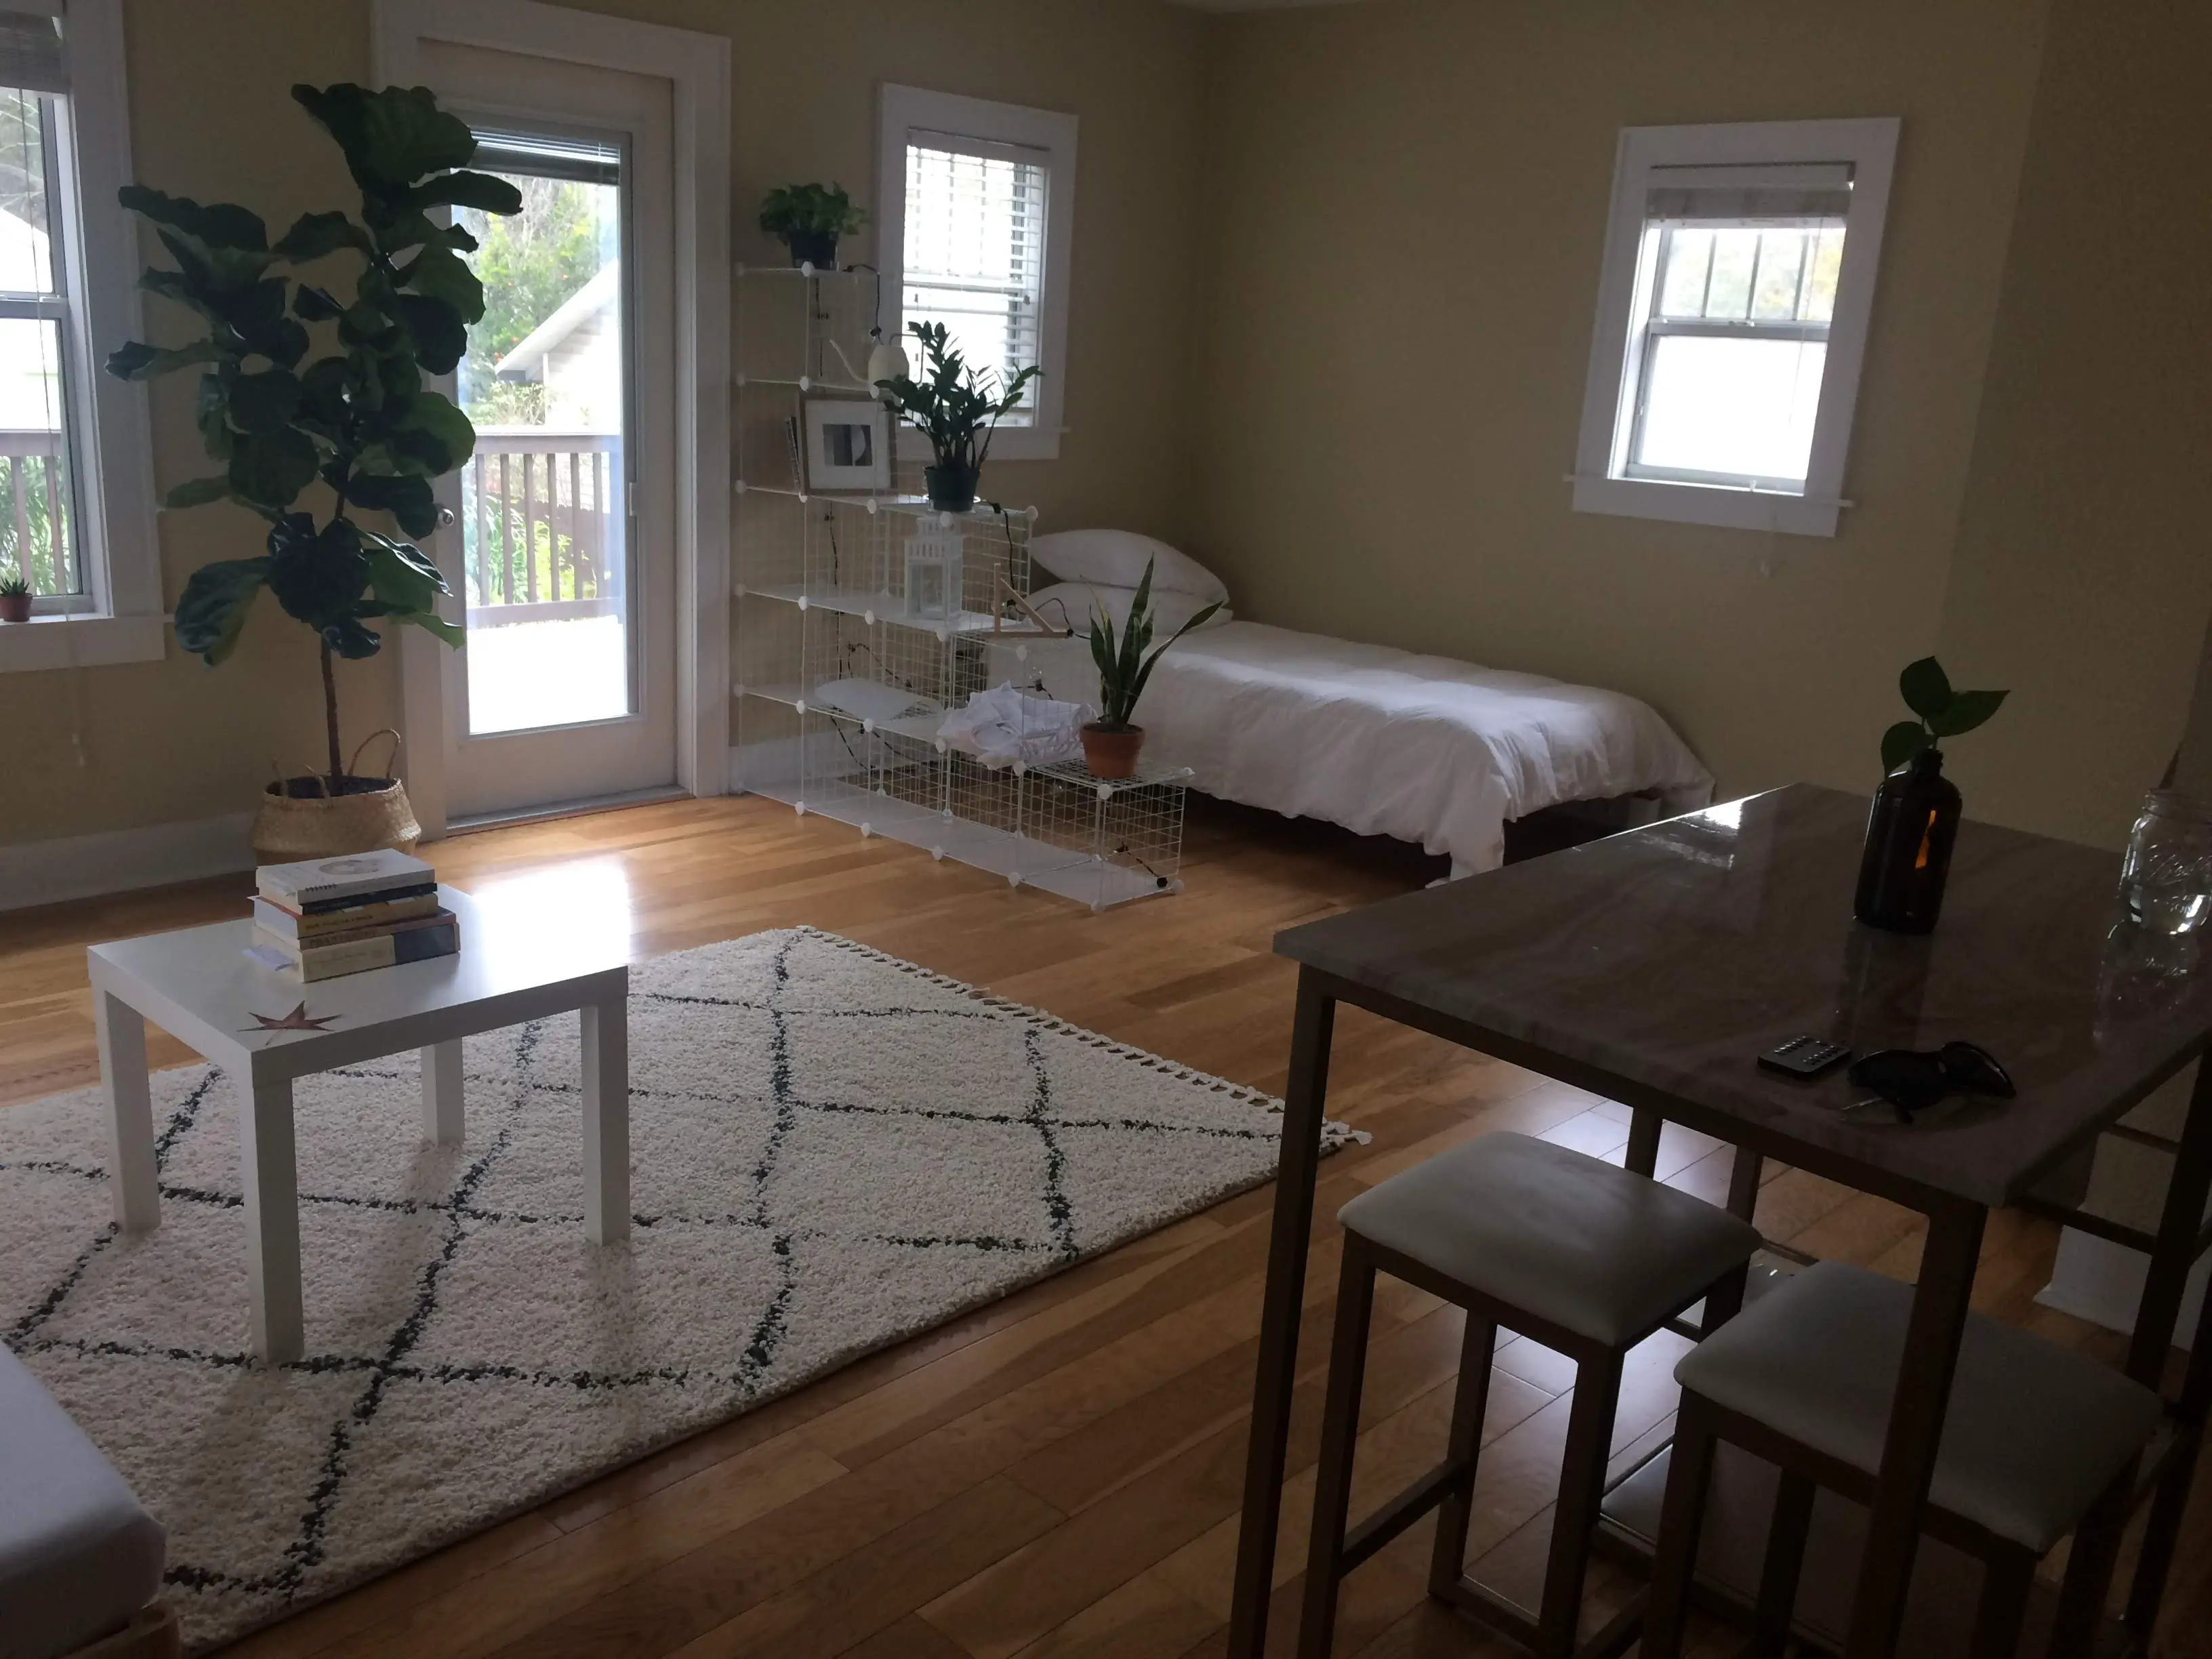 My Scandinavian minimalist apartment, pre-termite swarm